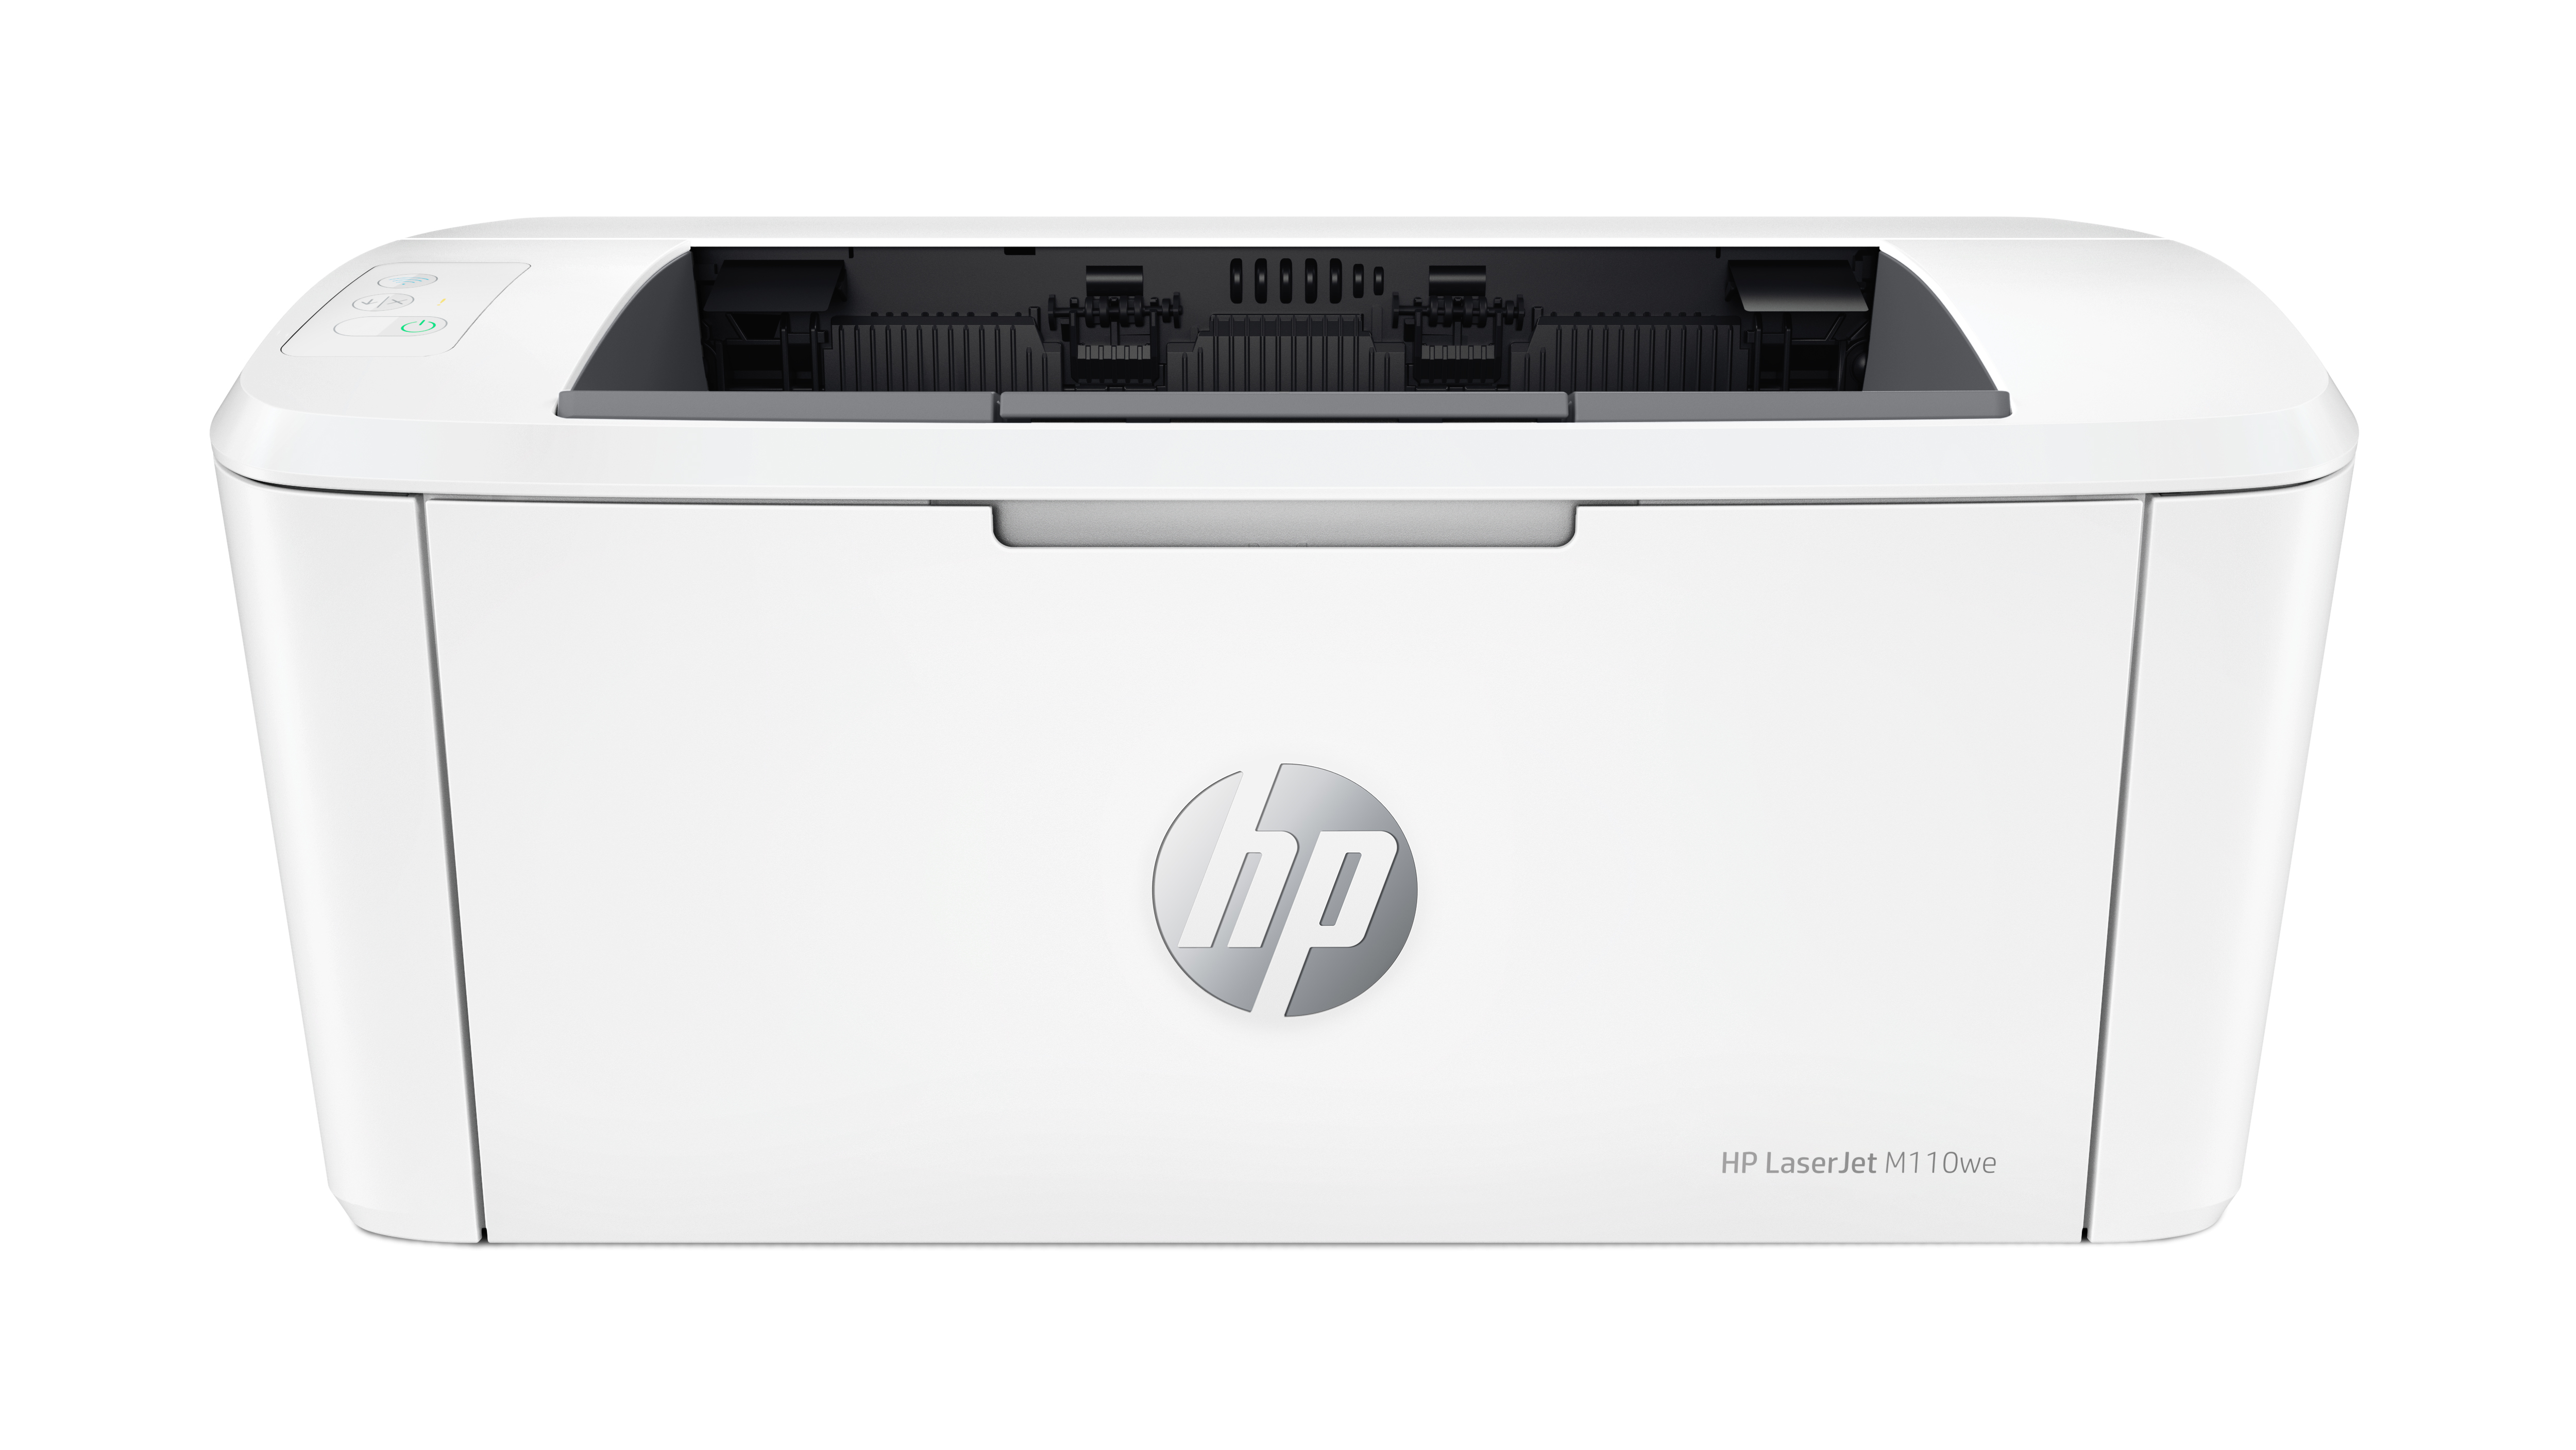 Image of HP LaserJet Stampante HP M110we, Bianco e nero, Stampante per Piccoli uffici, Stampa, wireless; HP+; Idonea a HP Instant Ink